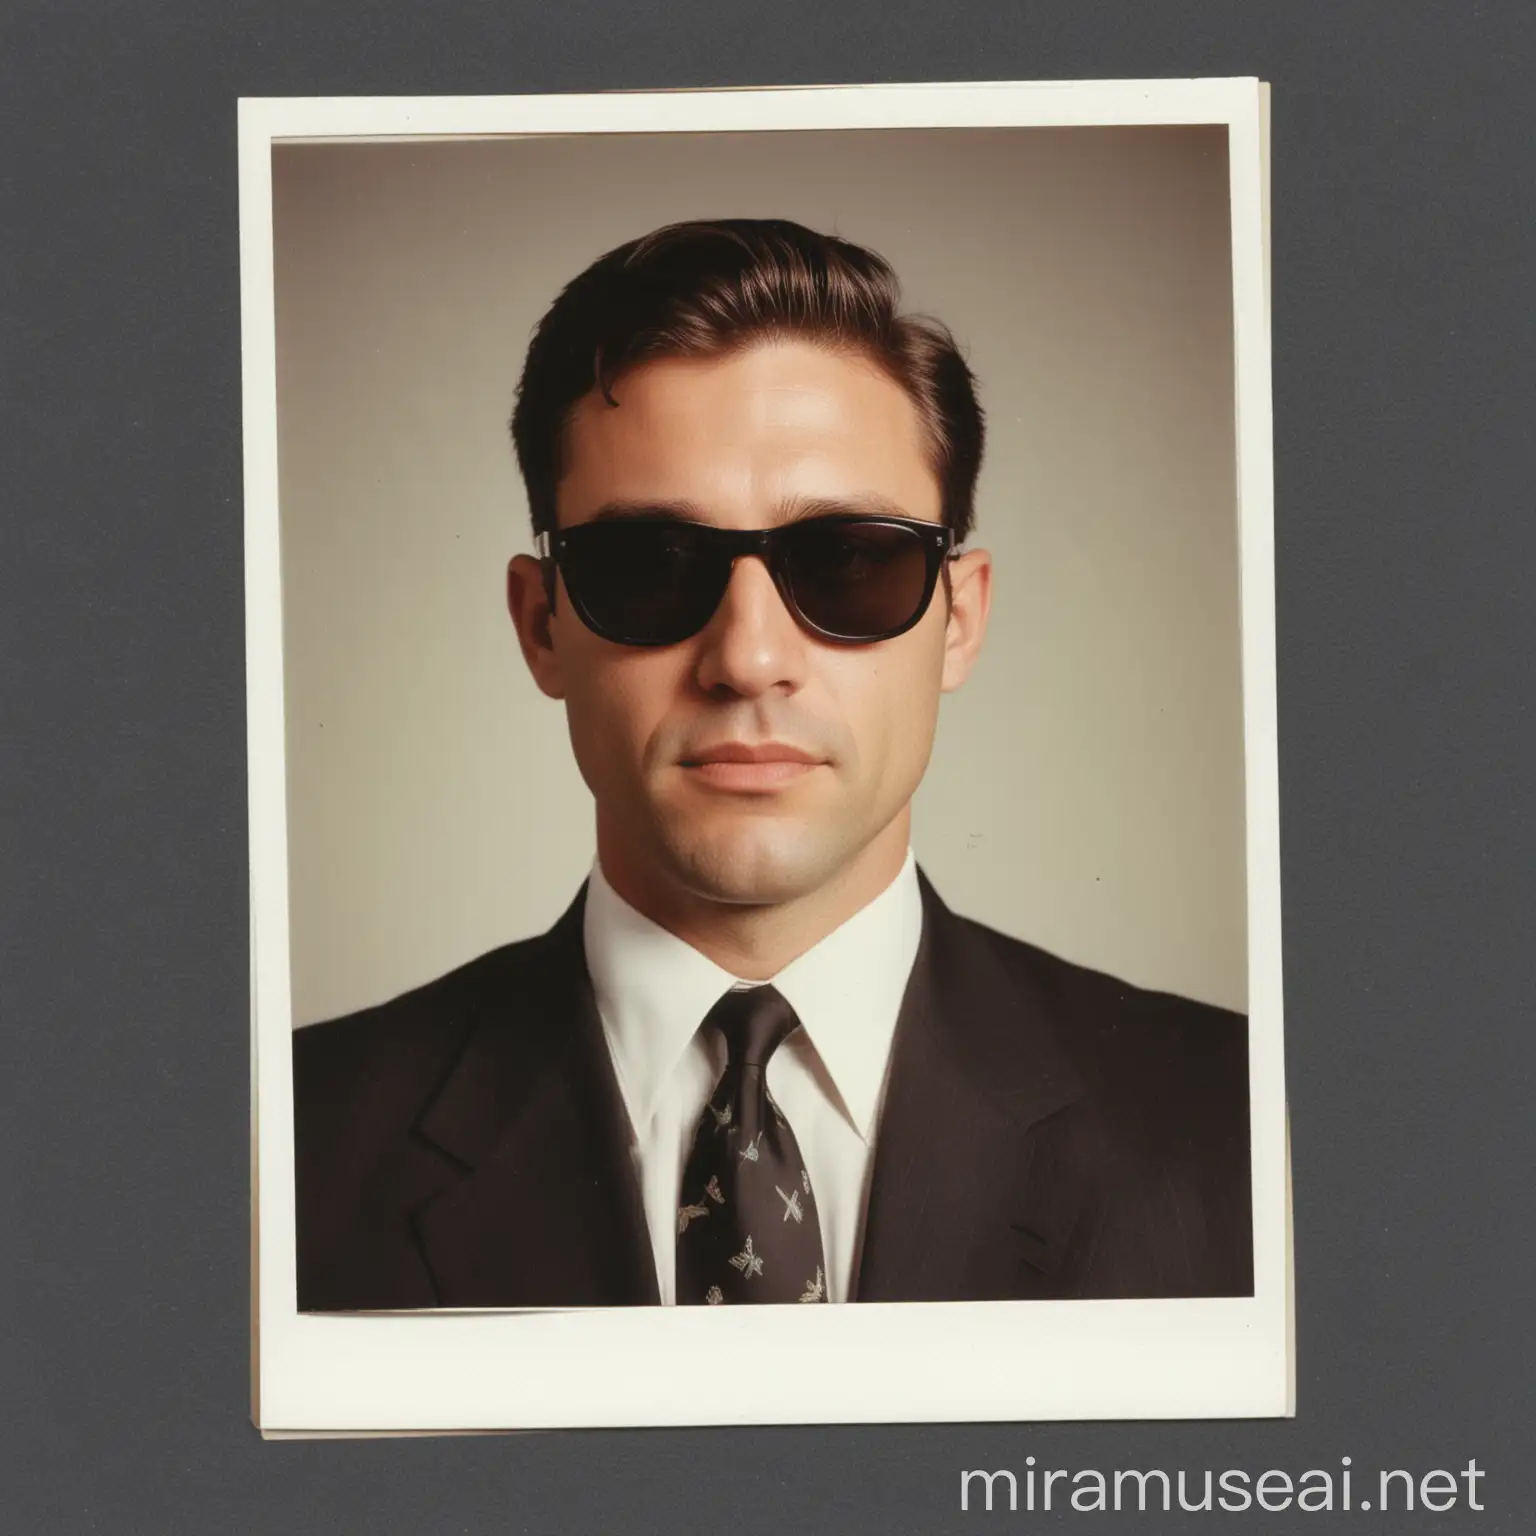 A portrait of an FBI Agent wearing sun glasses, polaroid photo, 1993